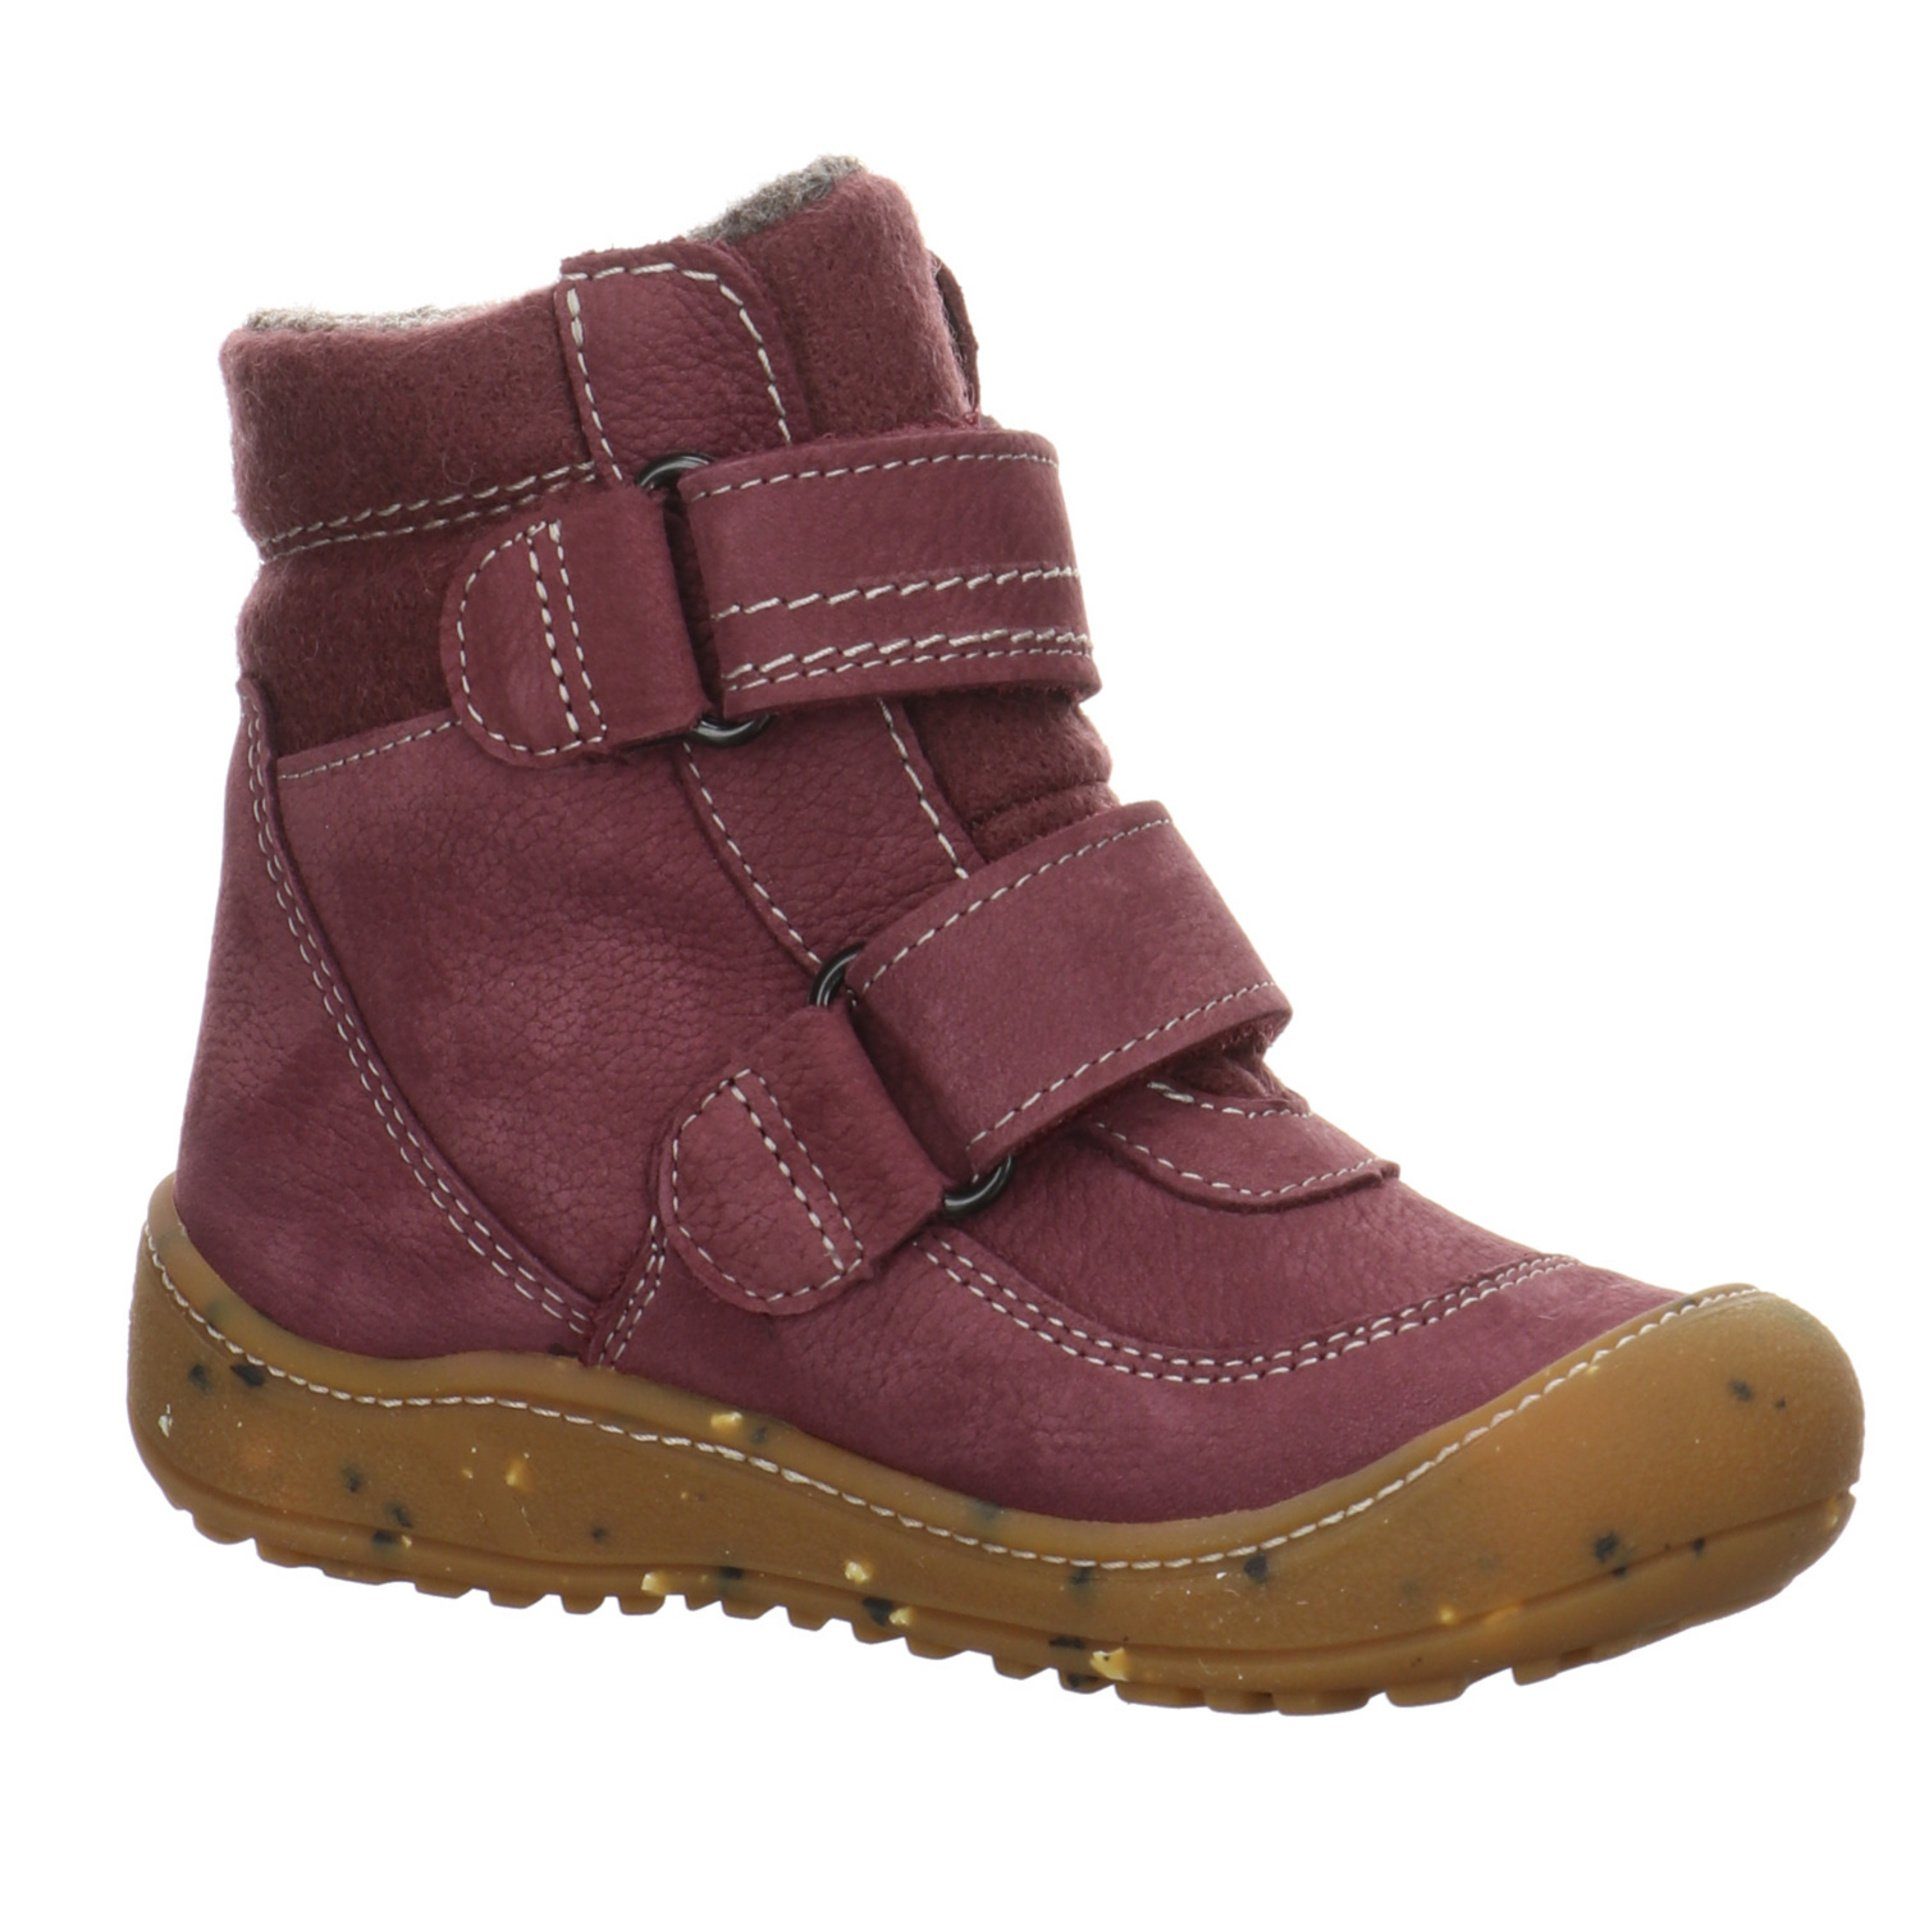 Leder-/Textilkombination Winterboots Boots Tex Ricosta uni pflaume Leder-/Textilkombination Wood